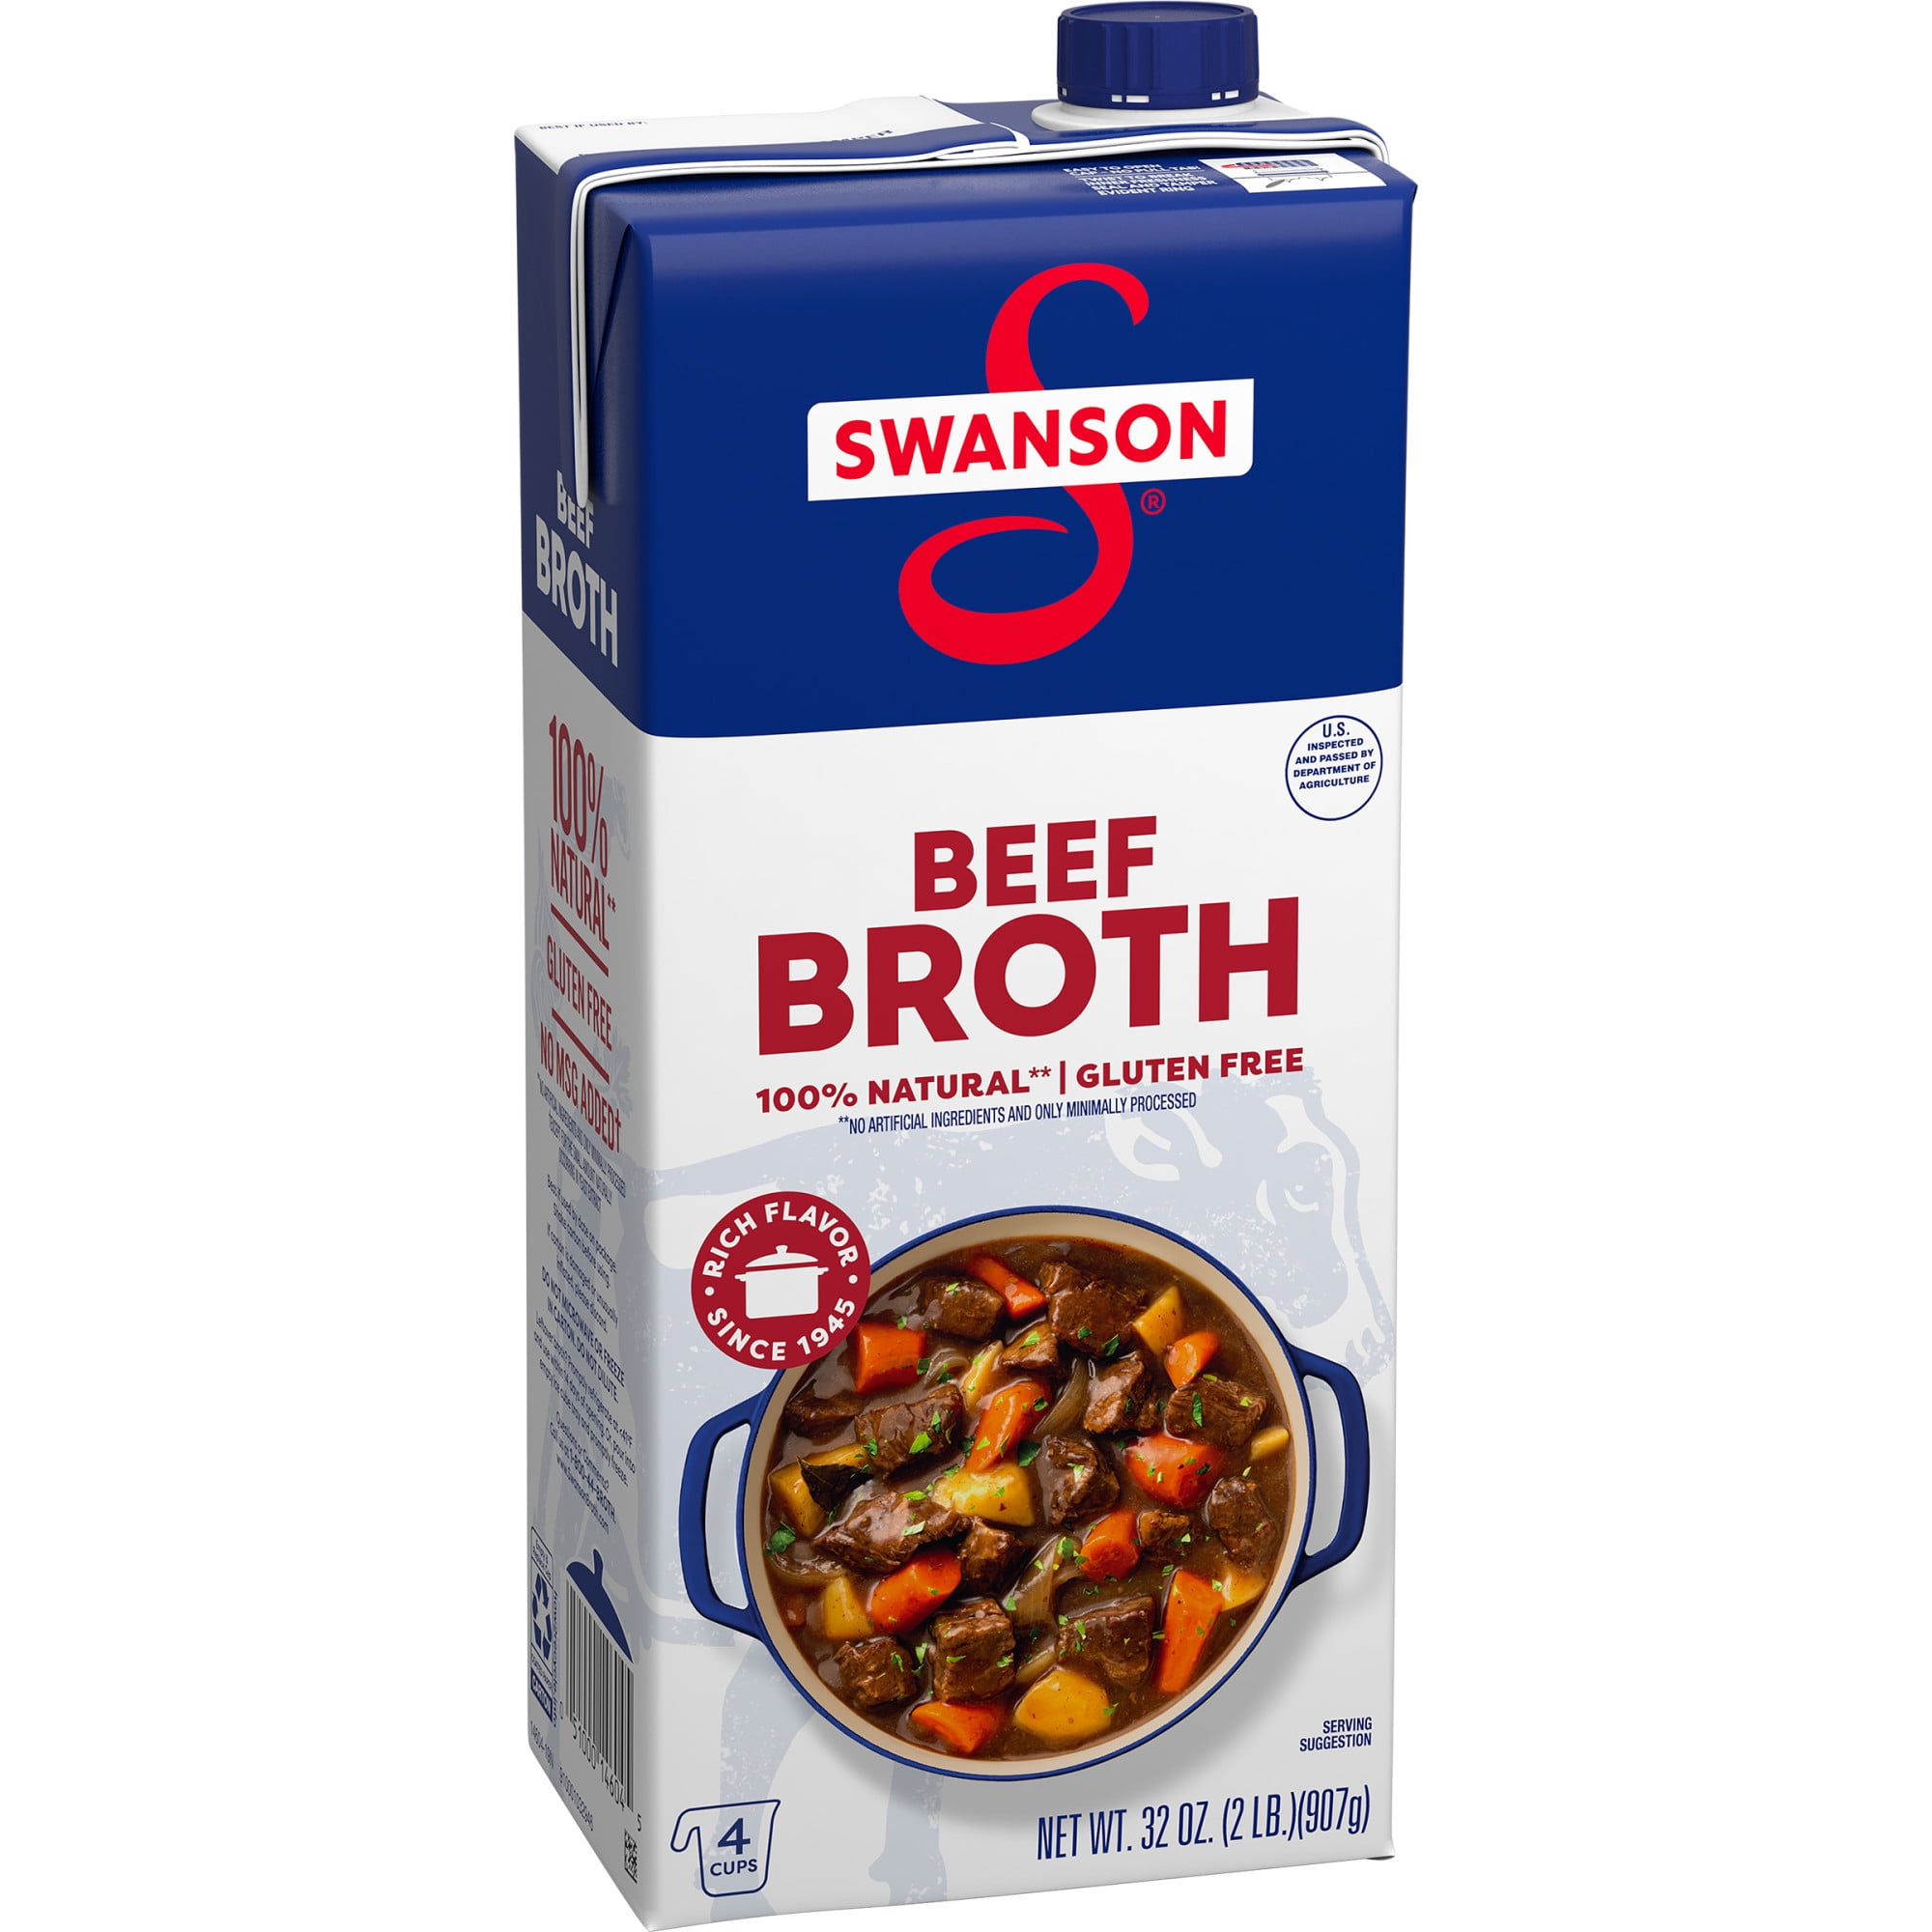 Swanson 100% Natural, Gluten-Free Beef Broth, 32 Oz Carton